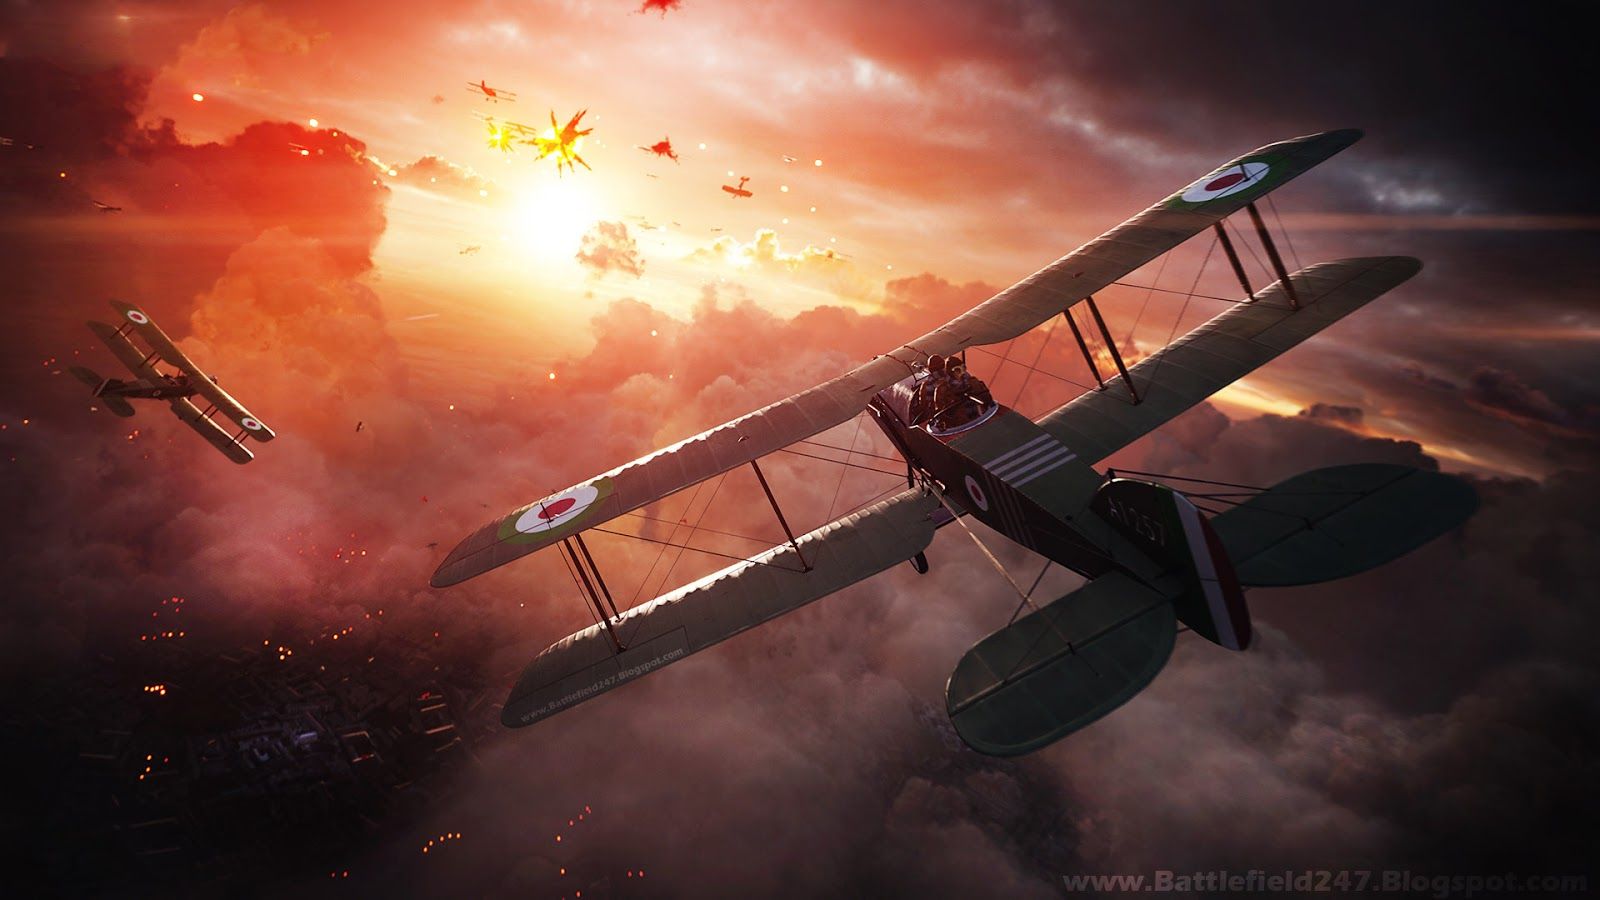 Free download Battlefield 247 [BF1 Wallpaper] Sunset Biplane